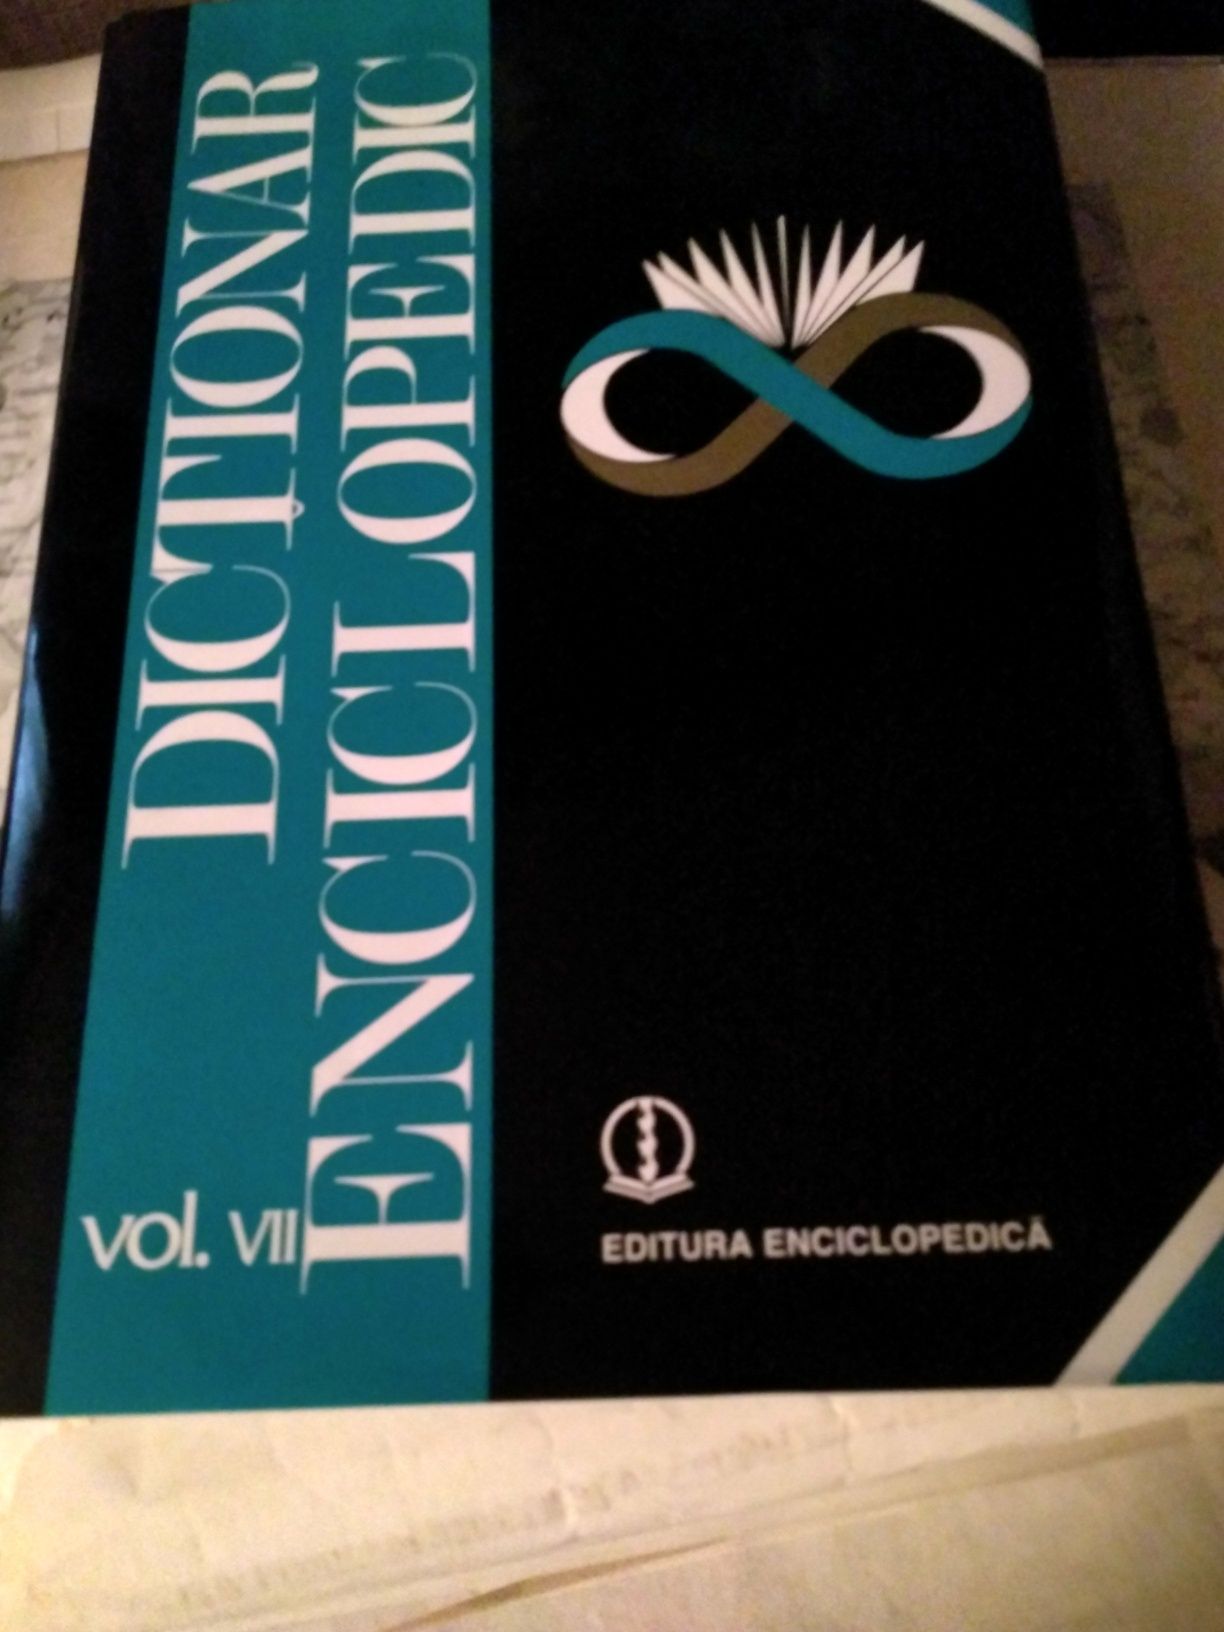 Enciclopedie Bucuresti 2009. 7 volume noi